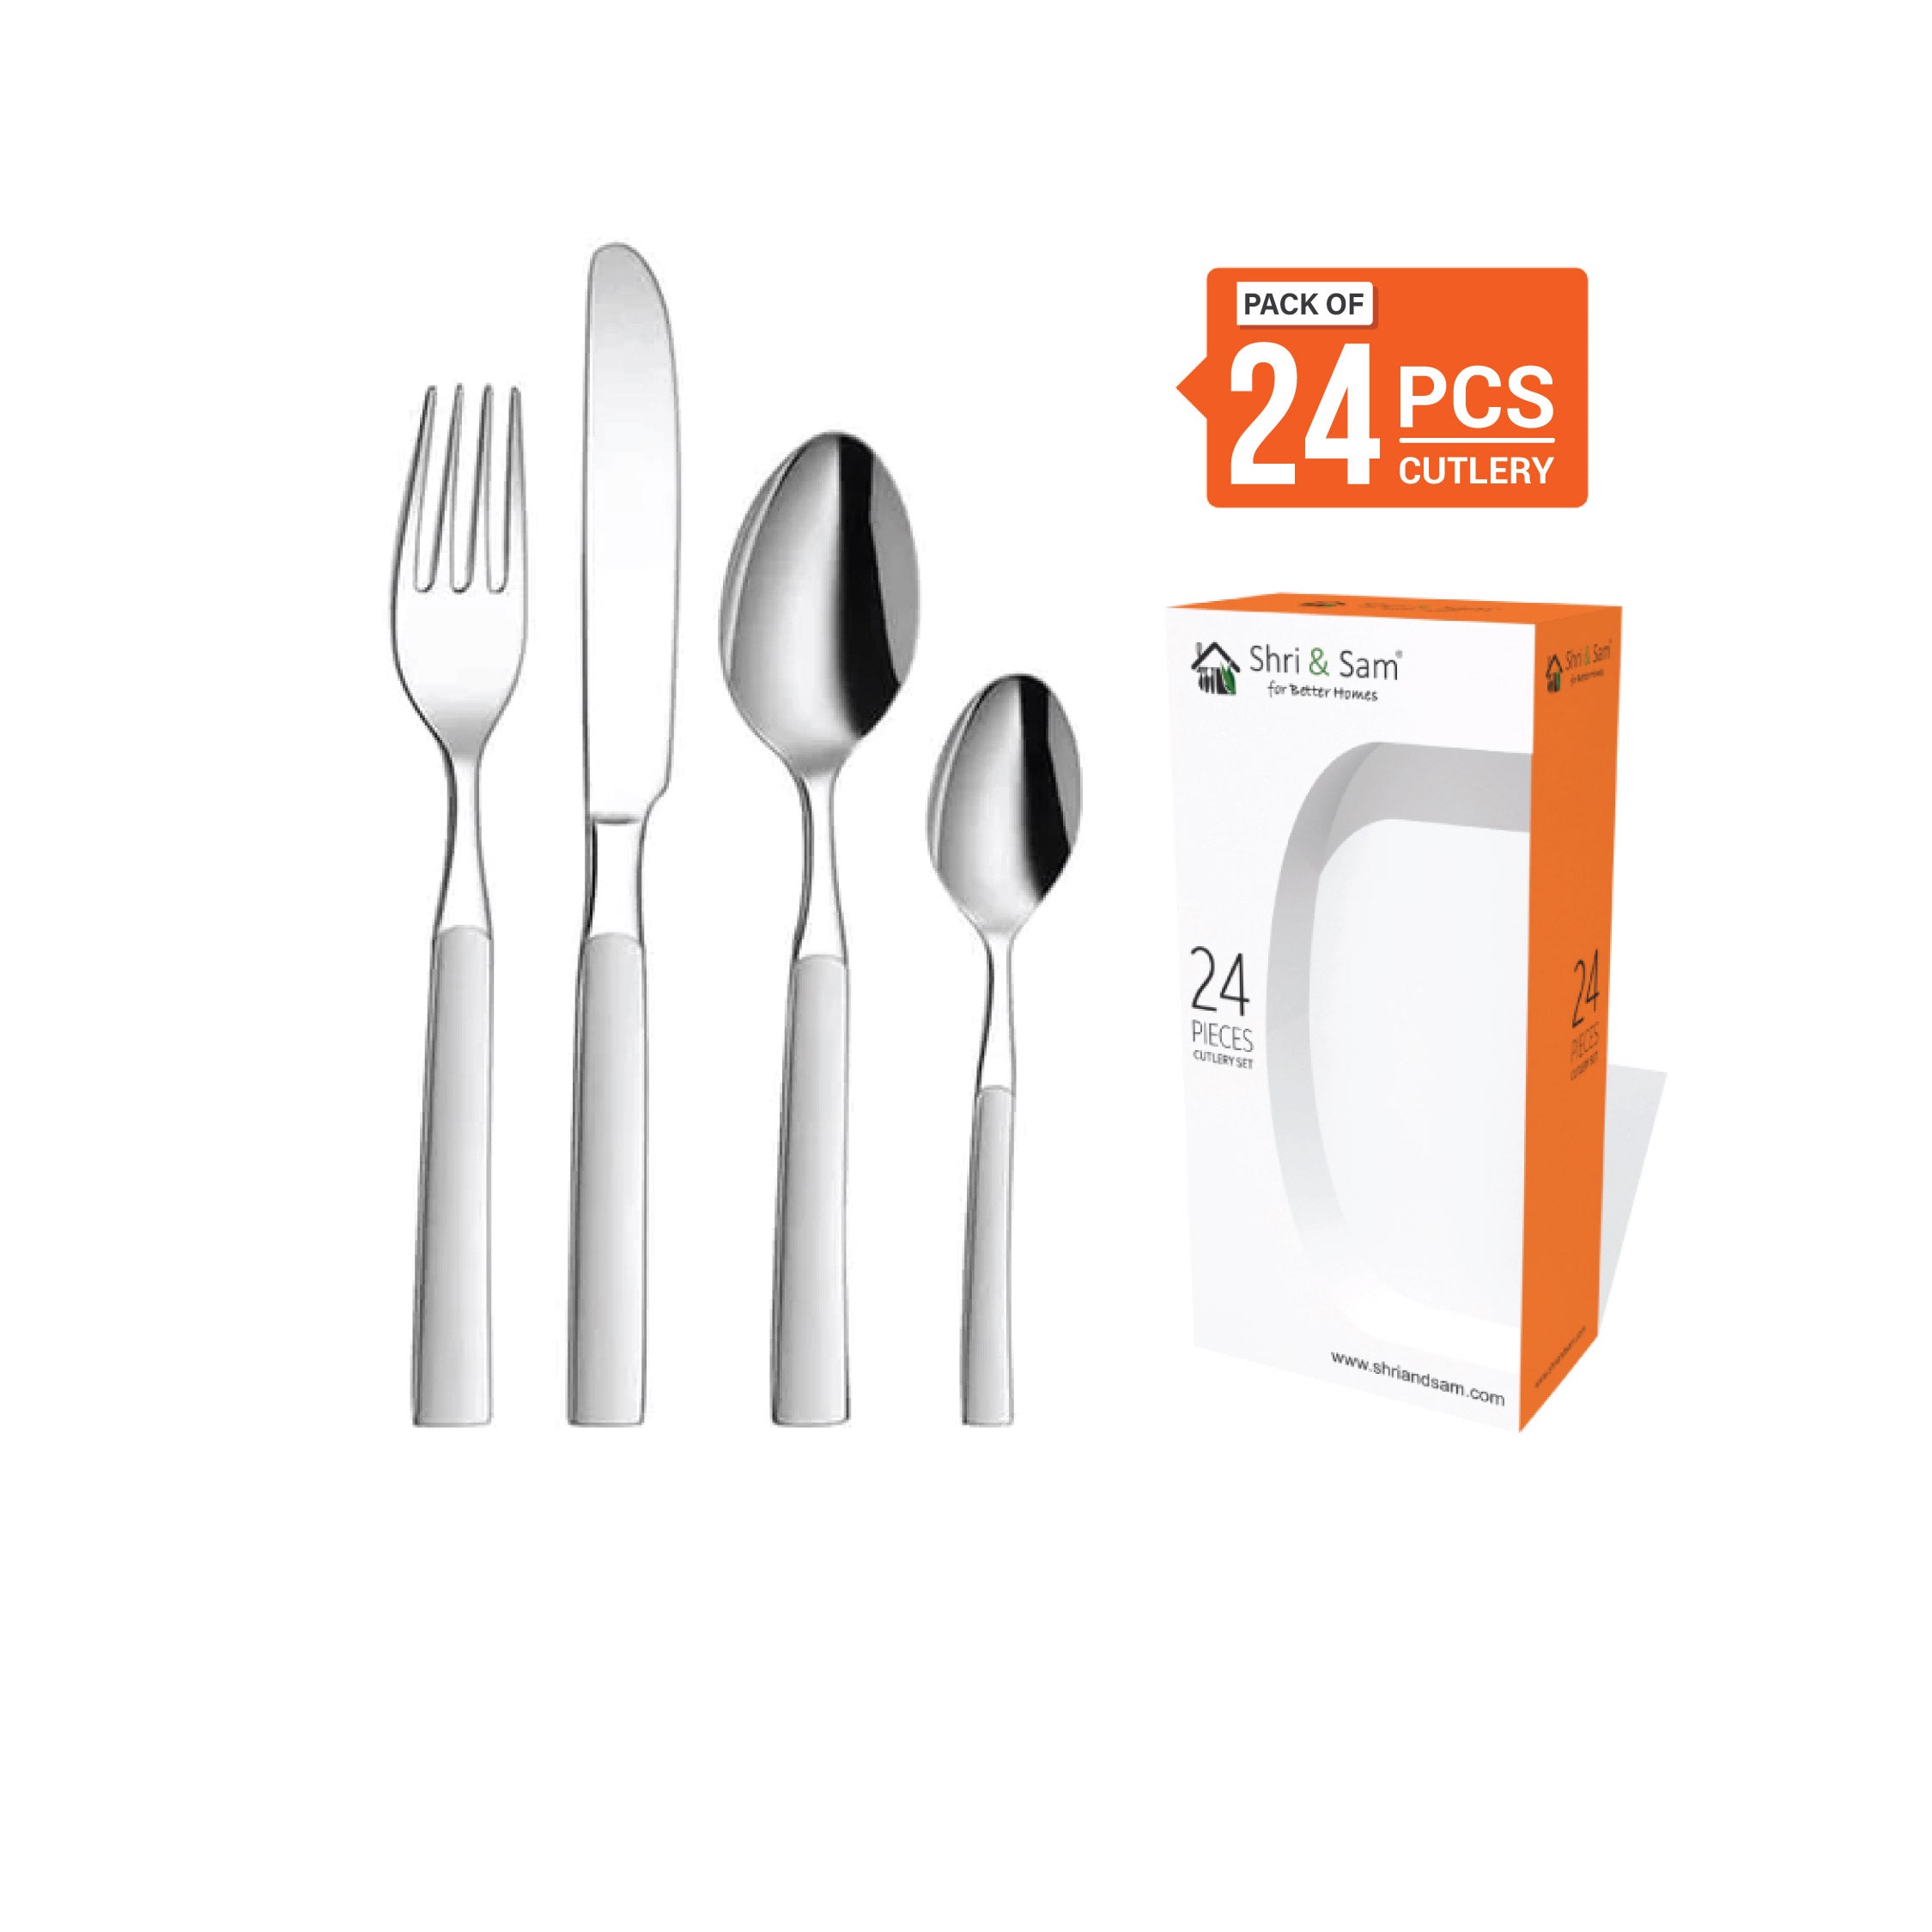 Stainless Steel 24 PCS Cutlery Set (6 Pcs Baby Spoon, 6 Pcs Dessert Spoon, 6 Pcs Dessert Fork and 6 Pcs Dessert Knife) Jewel